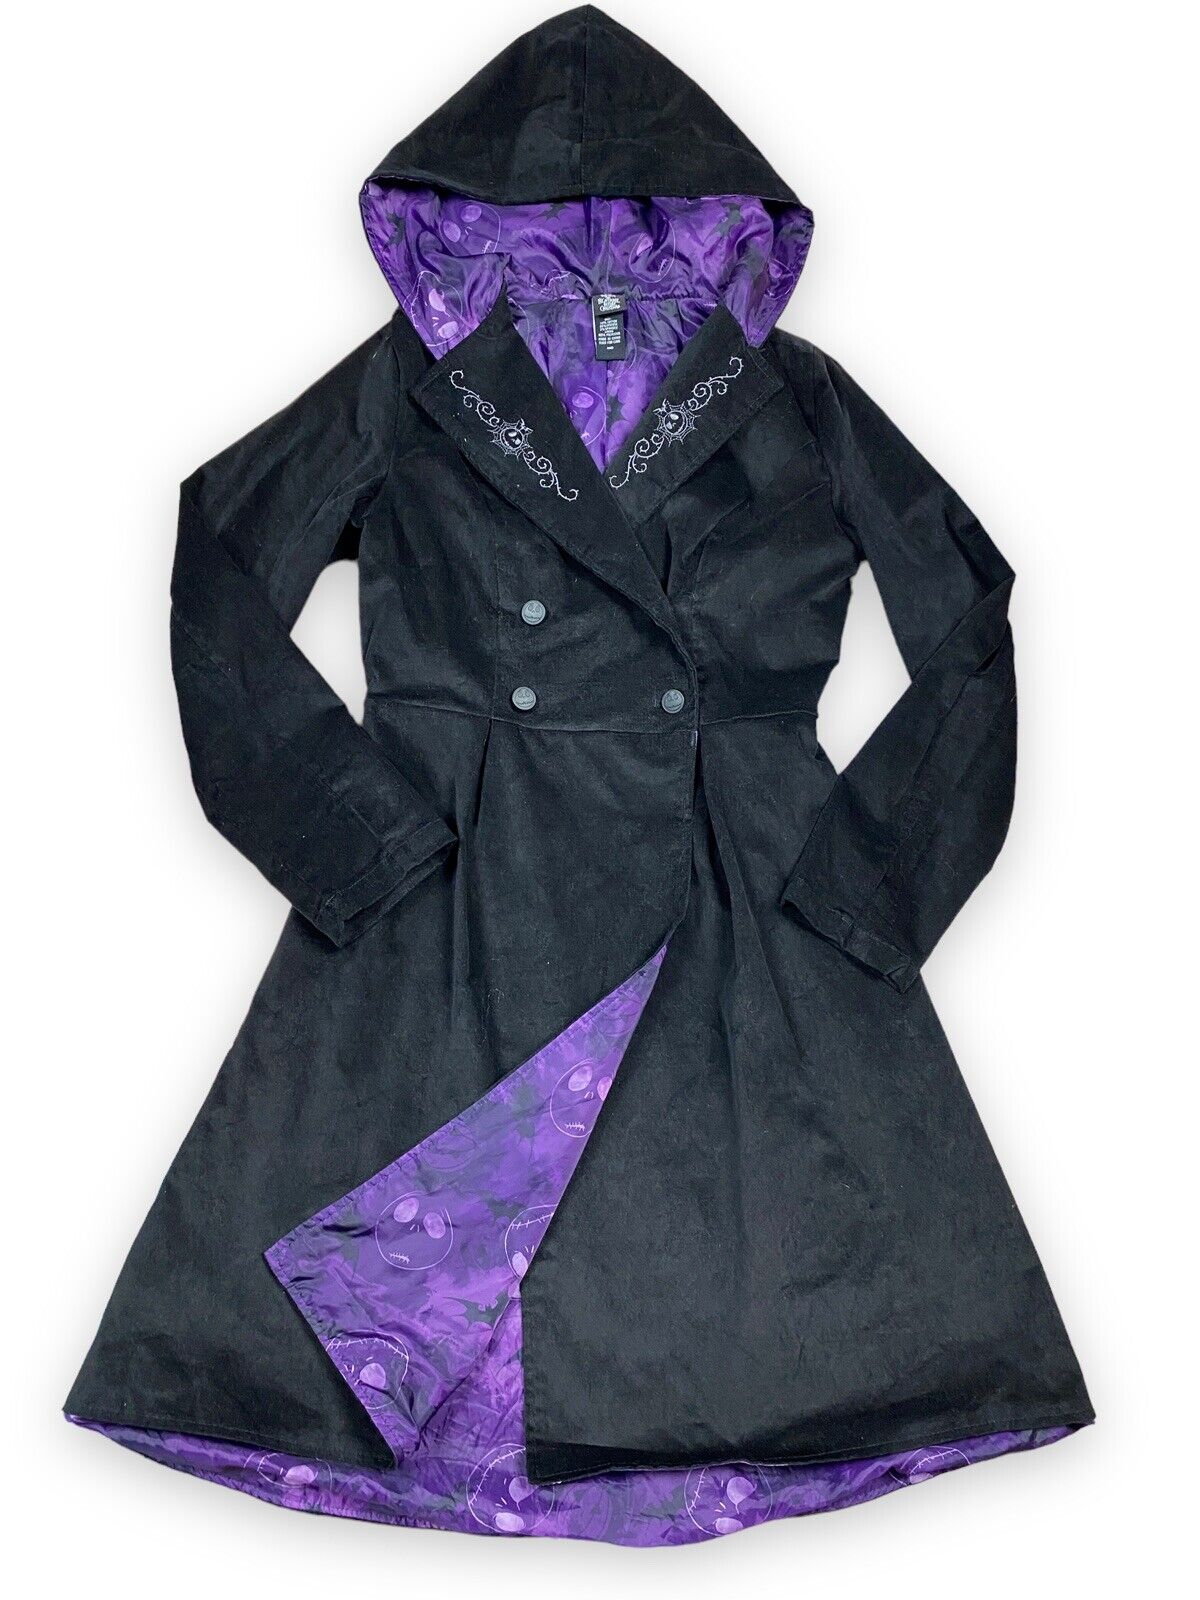 Disney The Nightmare Before Christmas Trench Coat Black Velour Purple Lining M